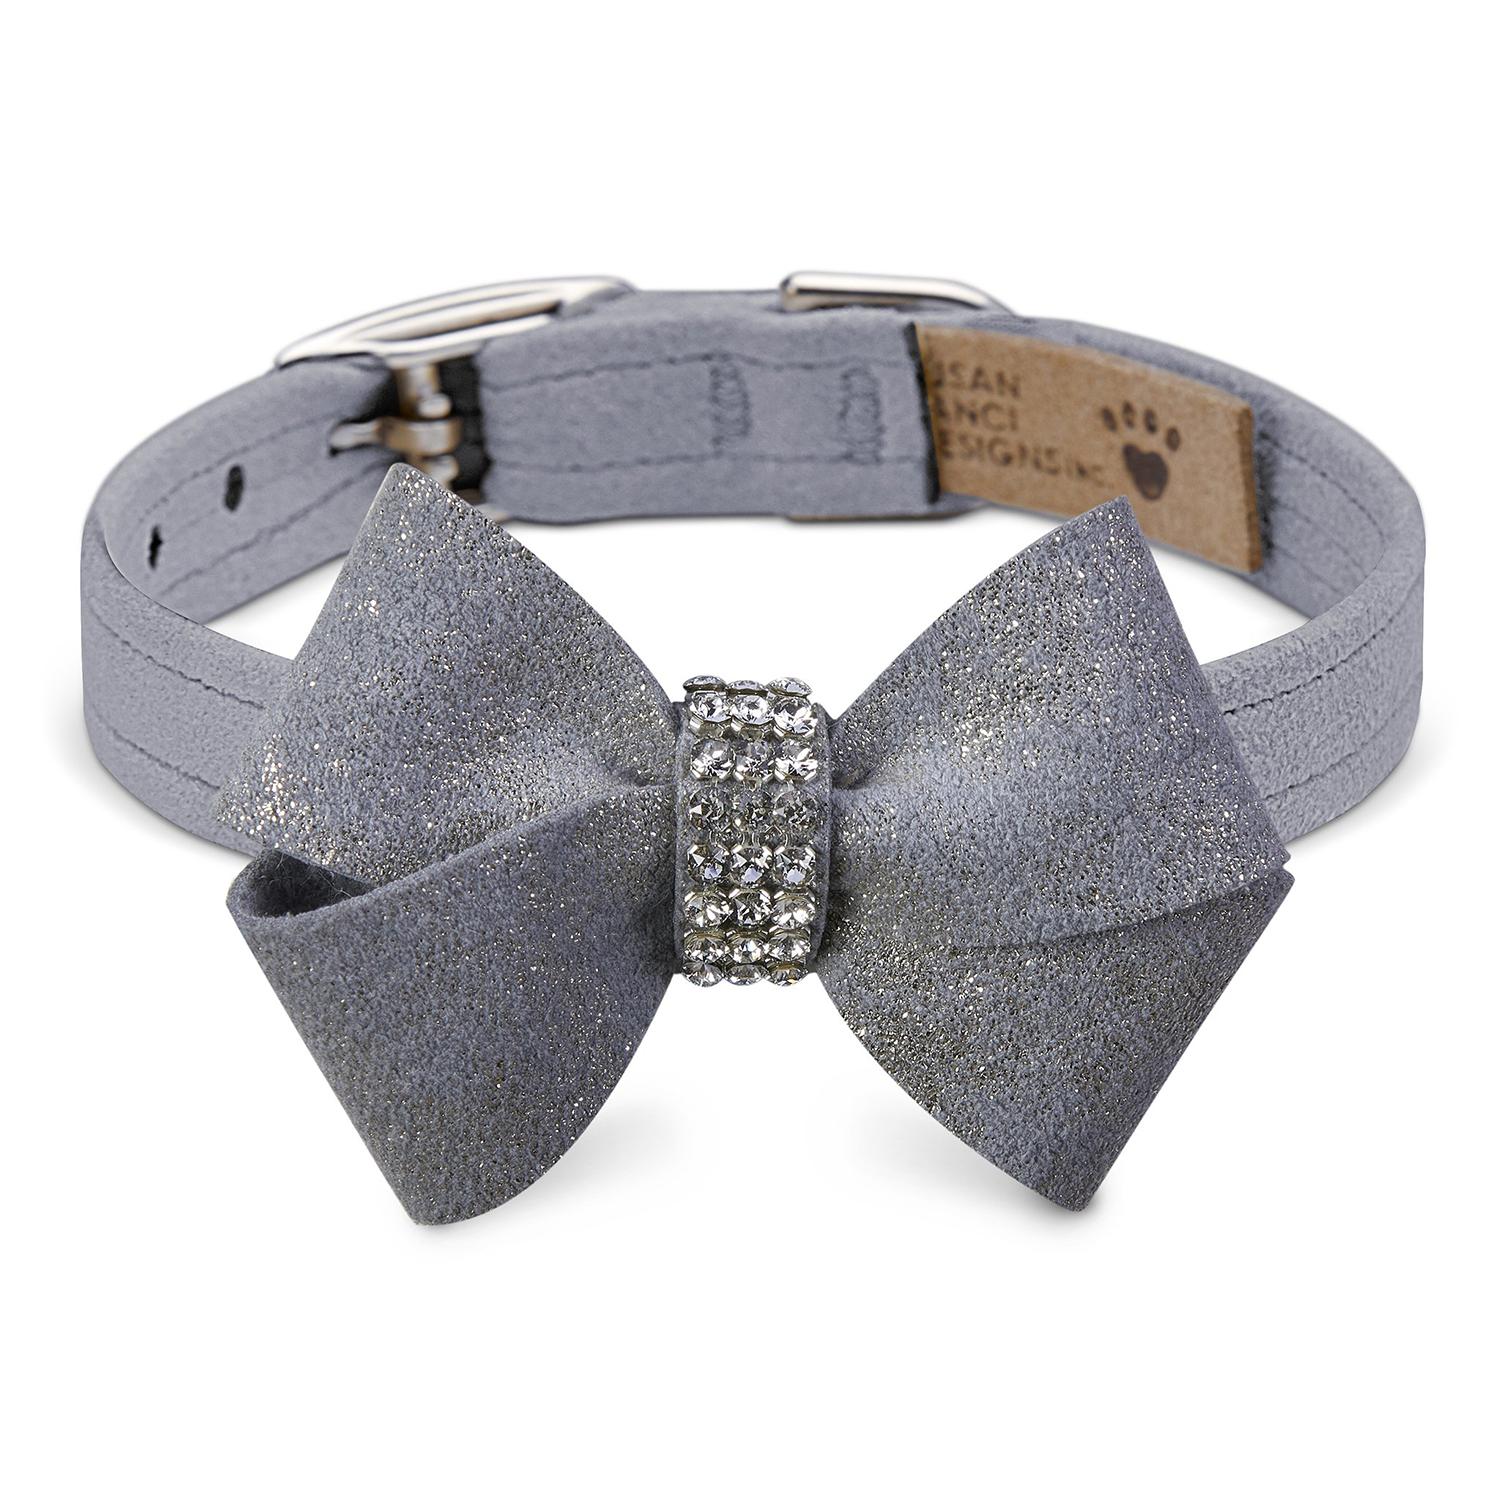 Platinum Glizerati Nouveau Bow Luxury Dog Collar by Susan Lanci - Platinum